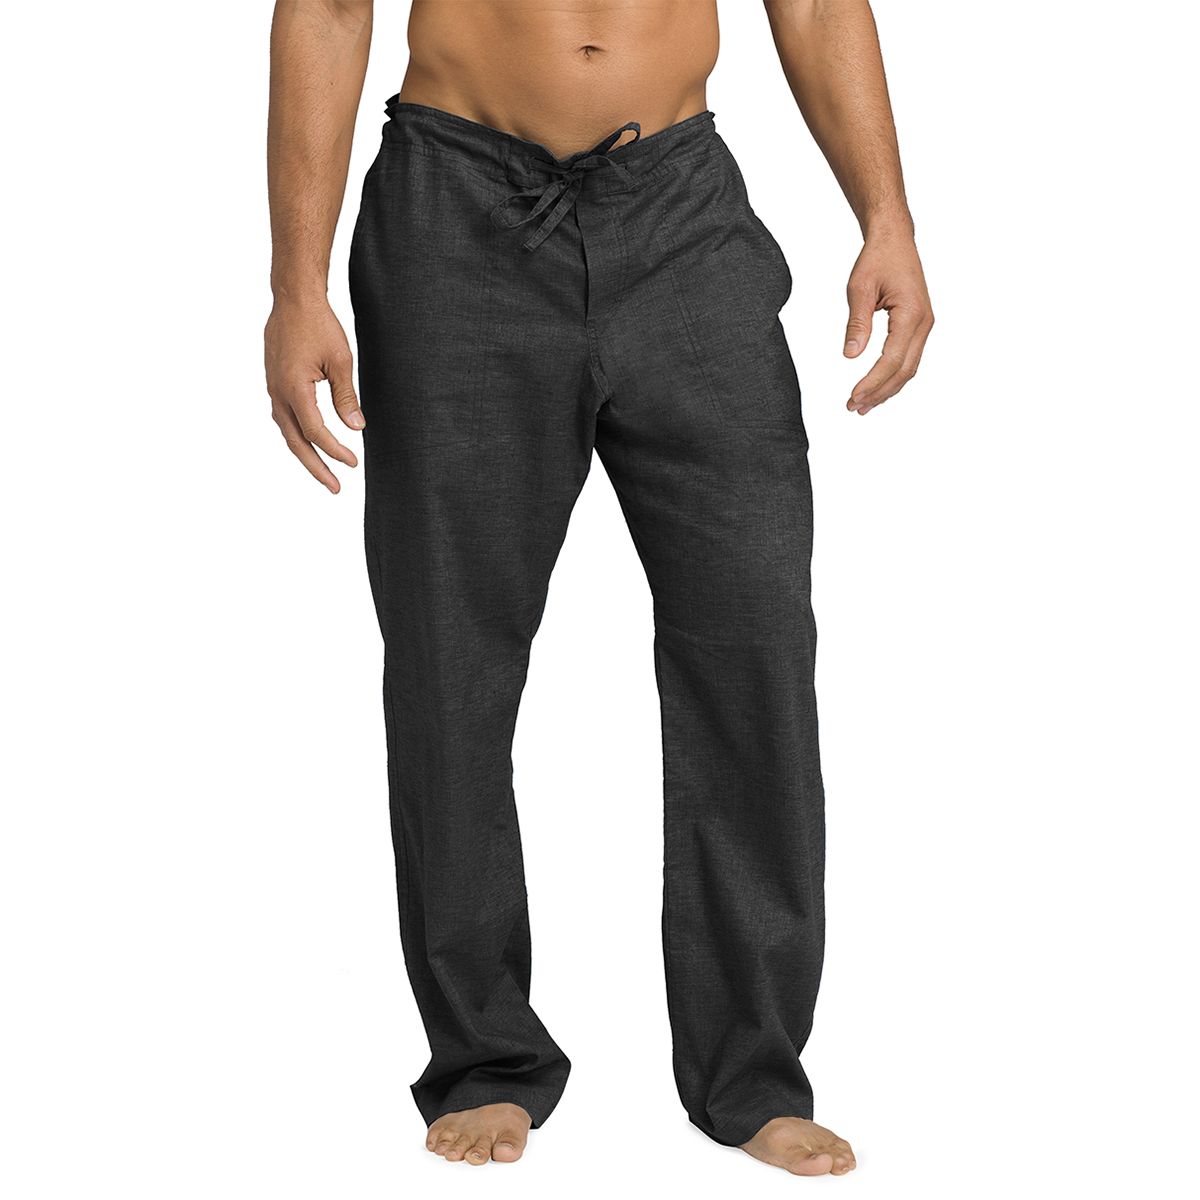 Prana Men's Super Mojo Yoga Pants at EverydayYoga.com - Free Shipping